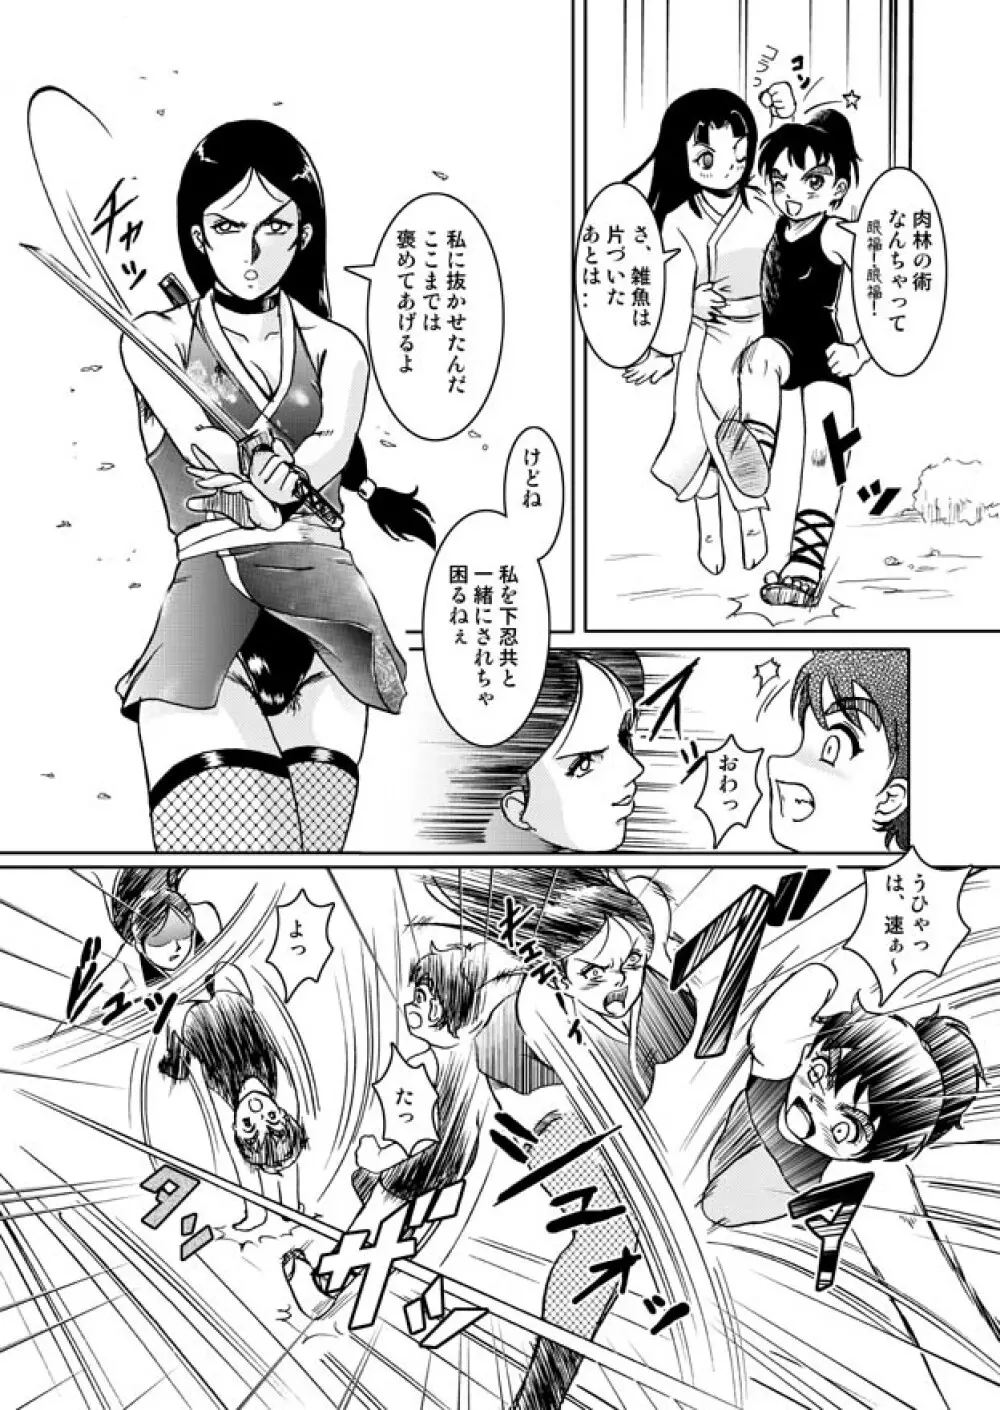 Same-themed manga about kid fighting female ninjas from japanese imageboard. 8ページ